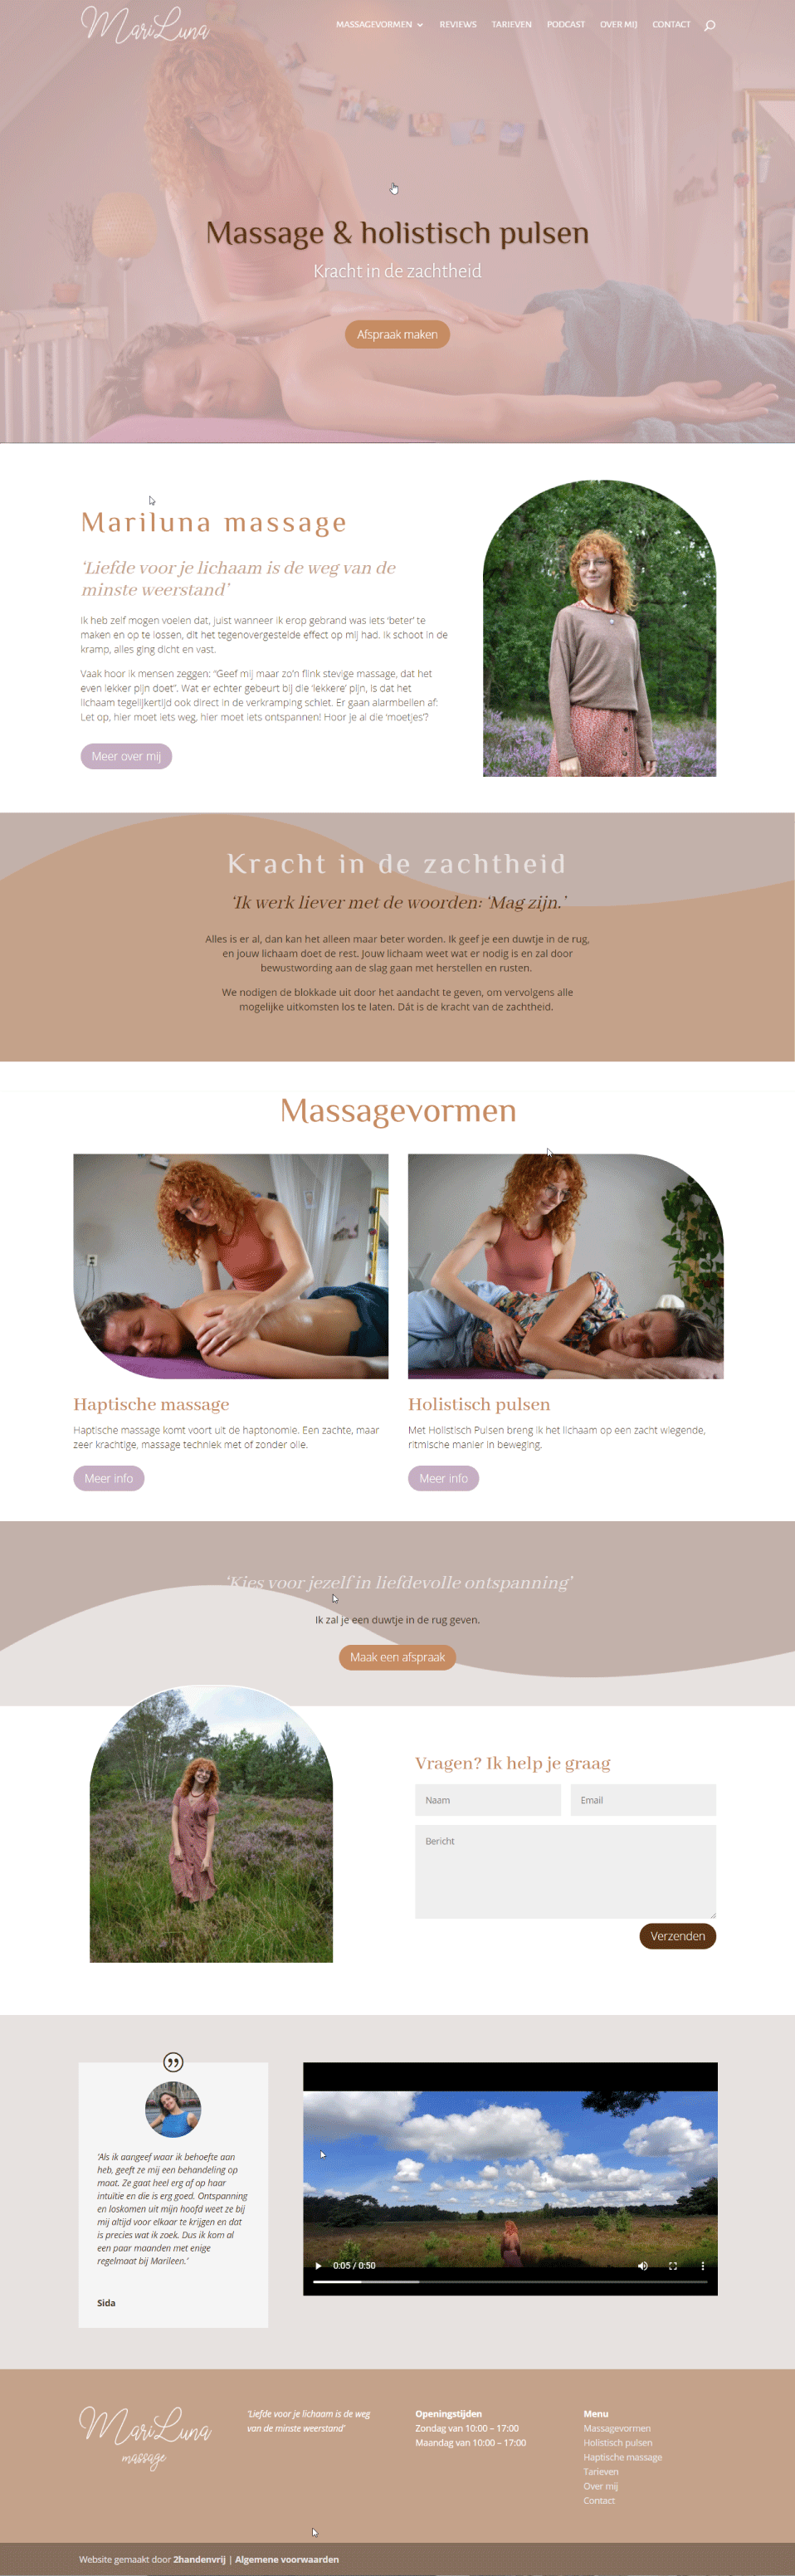 Mariluna massage webdesign home page ontwerp | 2handenvrij webdesign